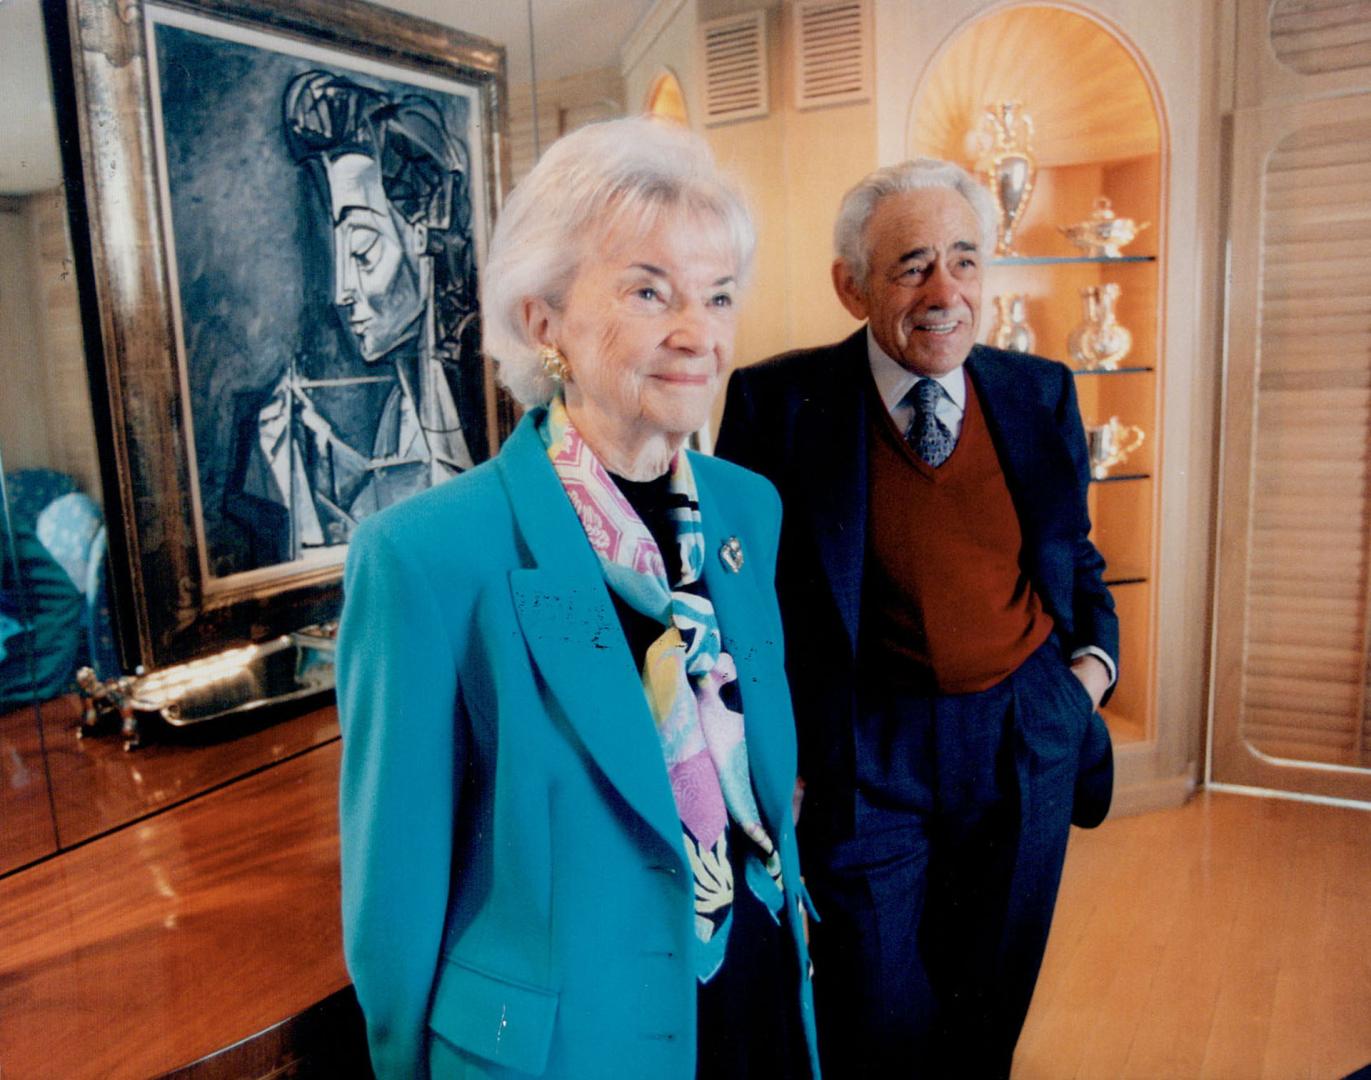 Vivian and David Campbell, Art Collectors and Philan Thropists.